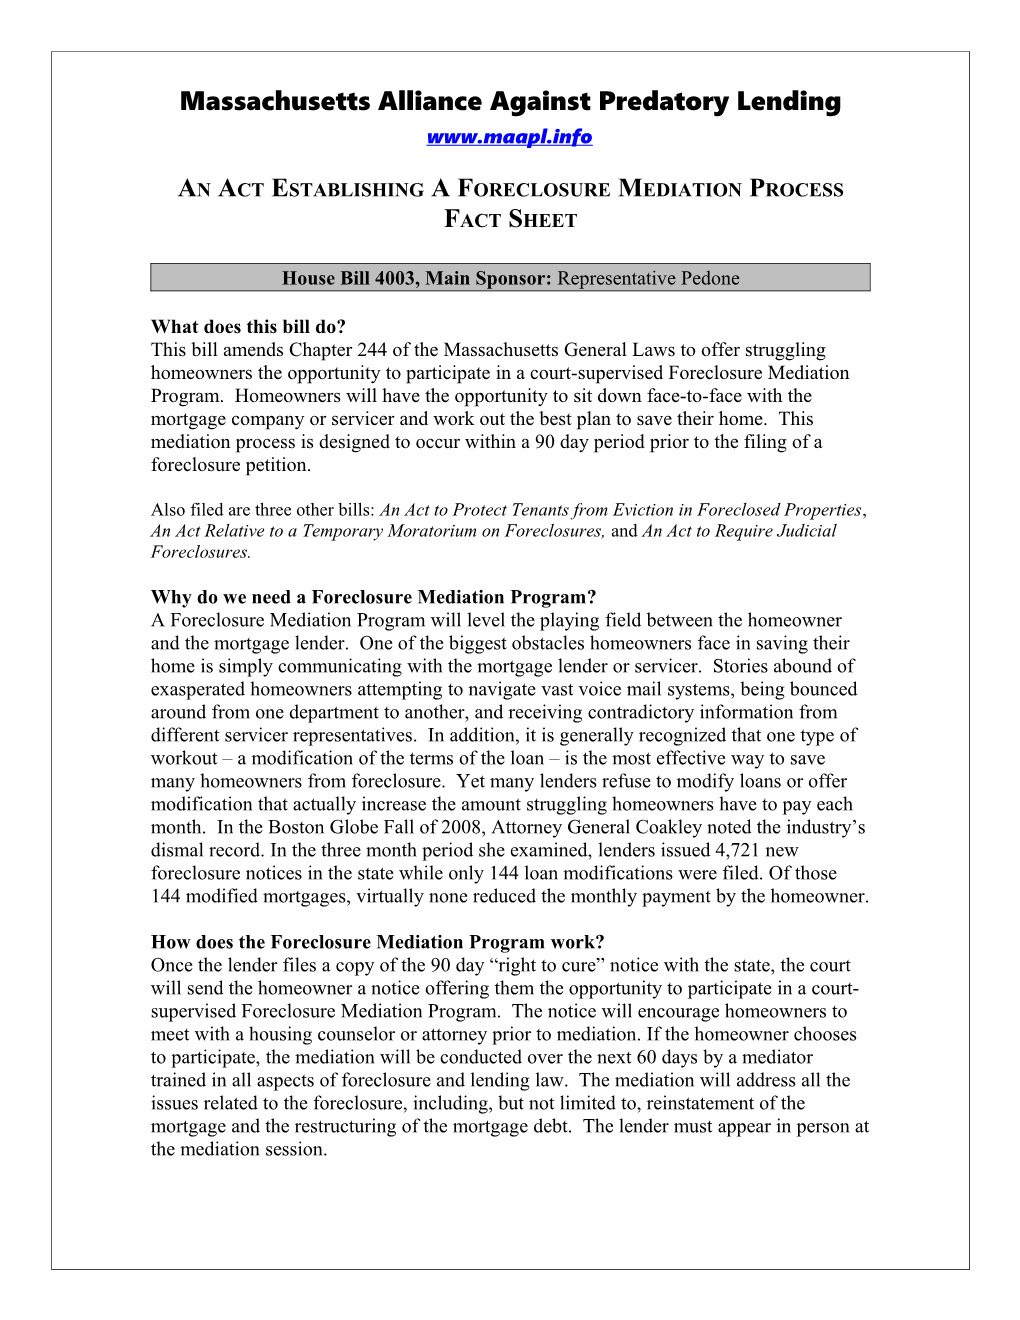 An Act Establishing a Foreclosure Mediation Process